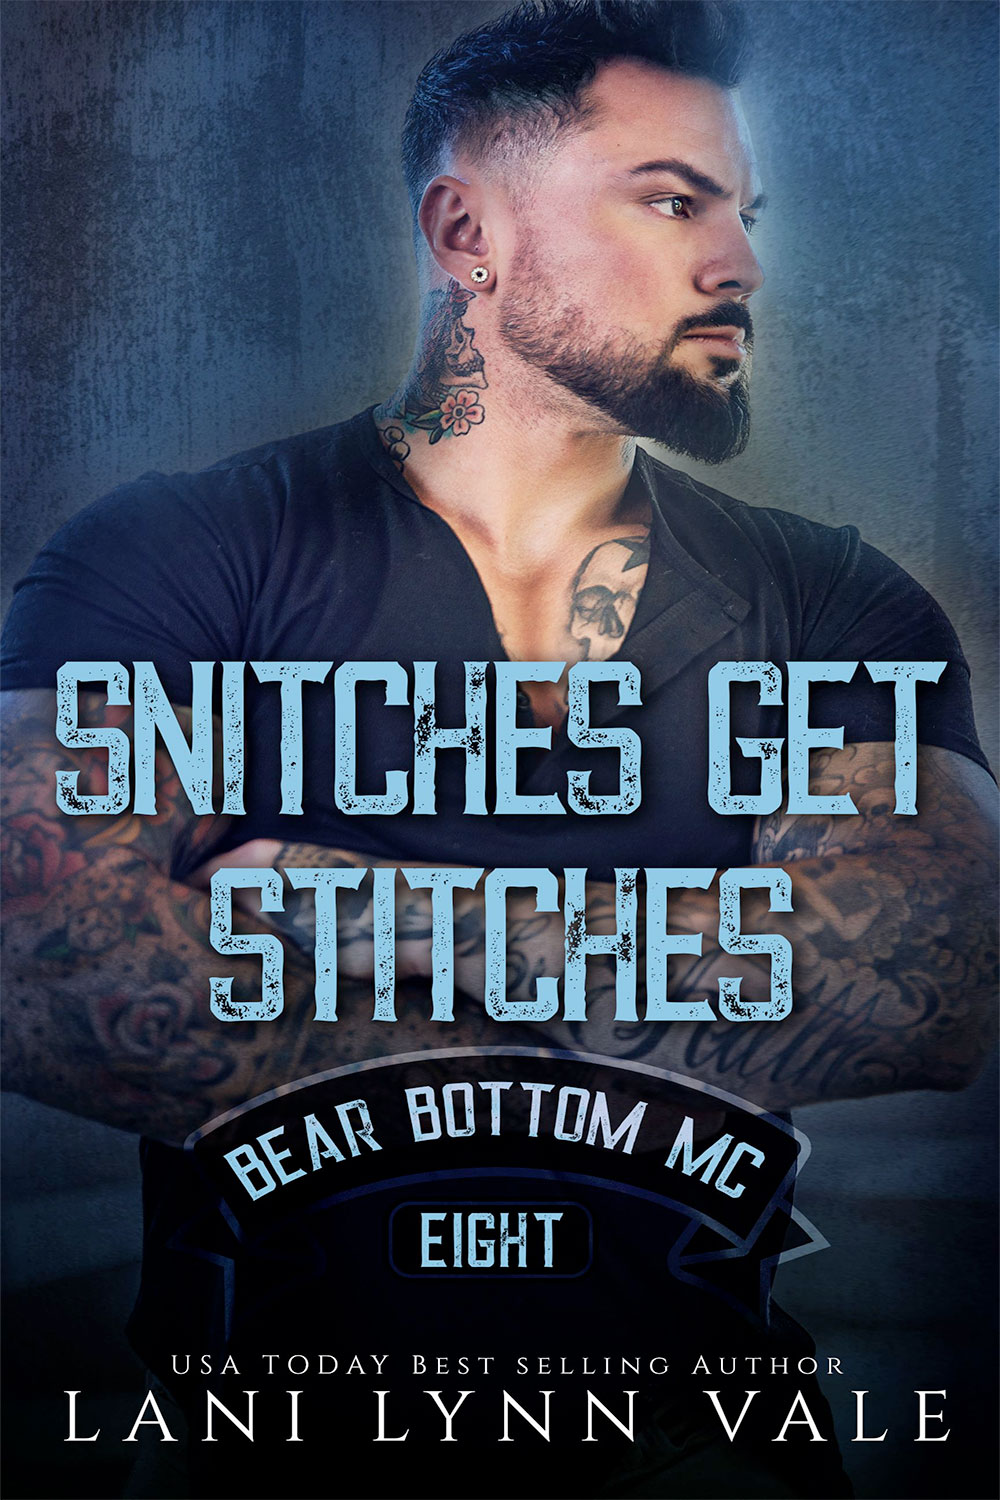 Bear Bottom Guardian MC #8: Snitches Get Stitches